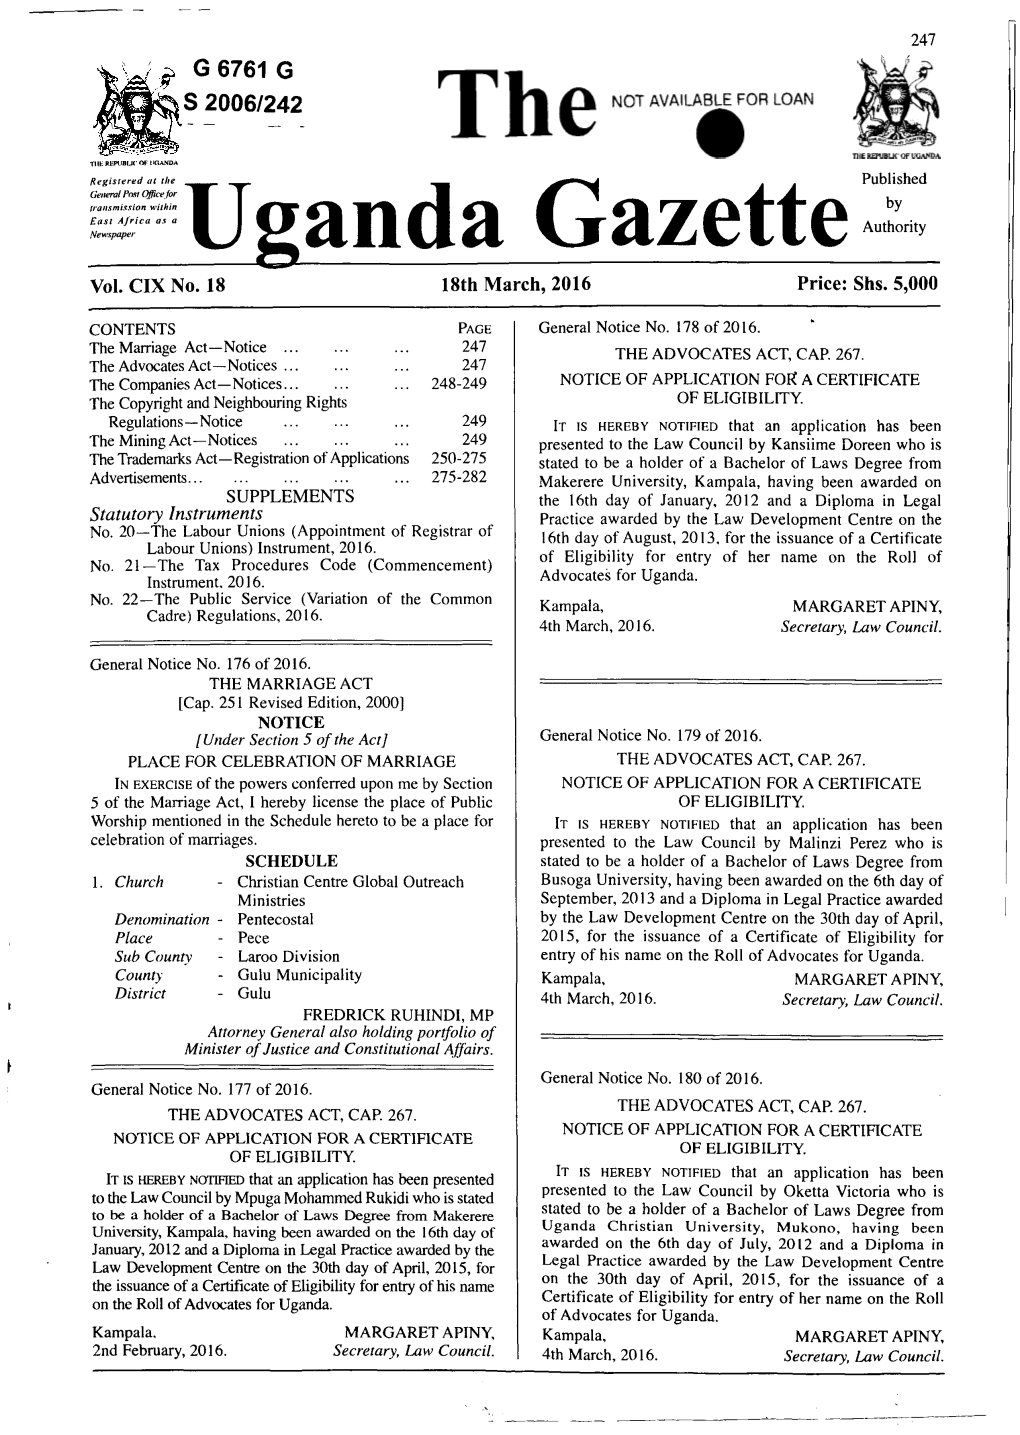 Uganda Gazette Vol